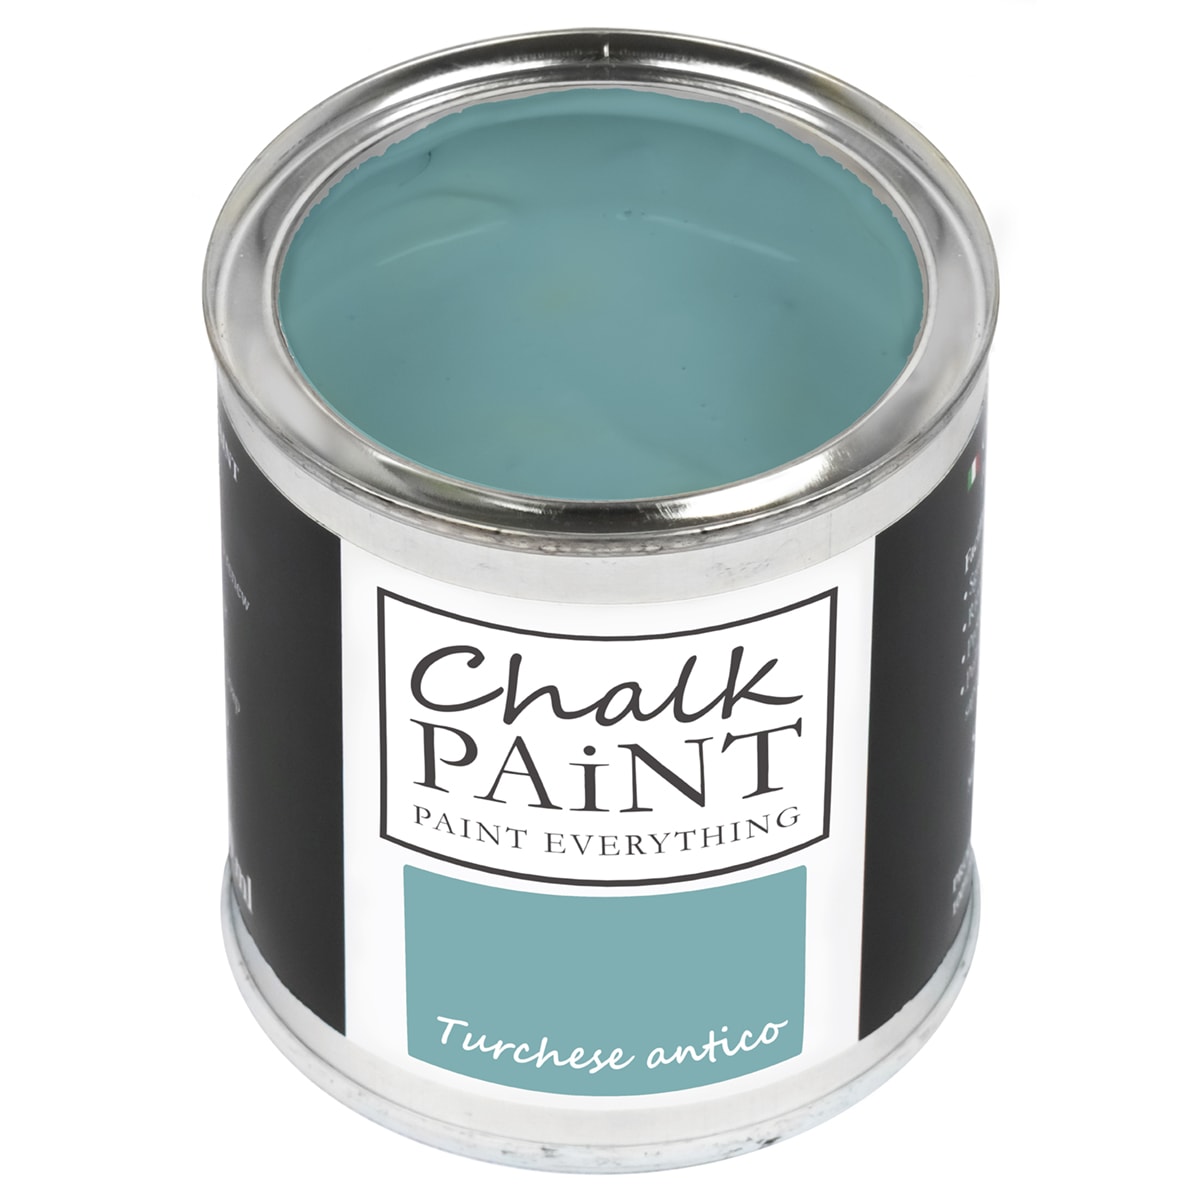 Chalk Paint Turchese antico